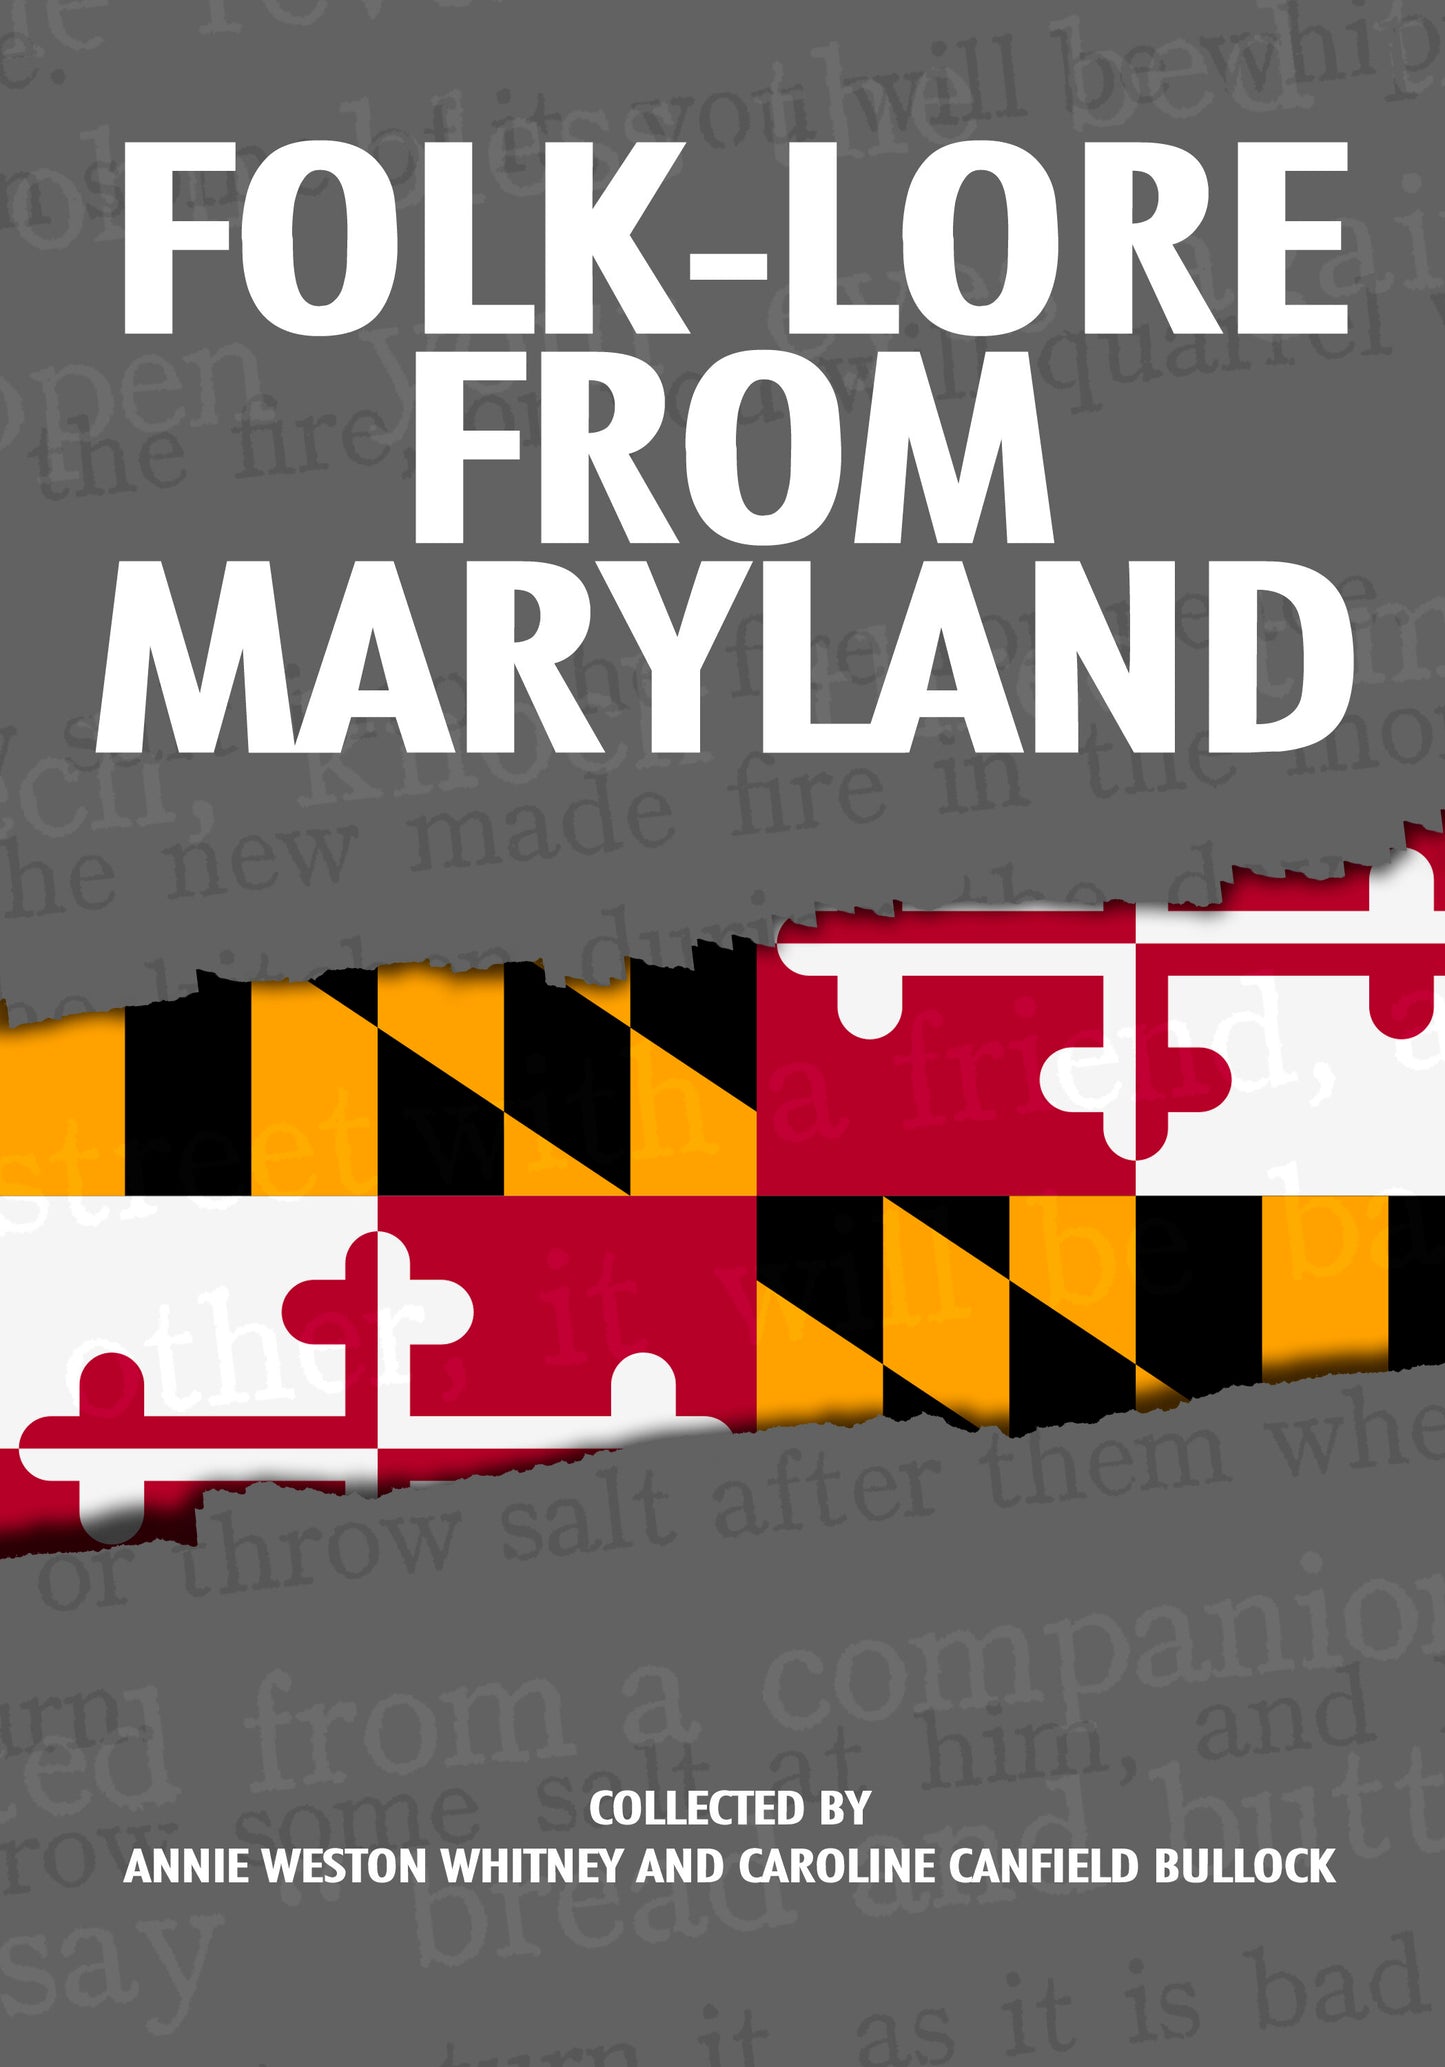 Folklore of Maryland